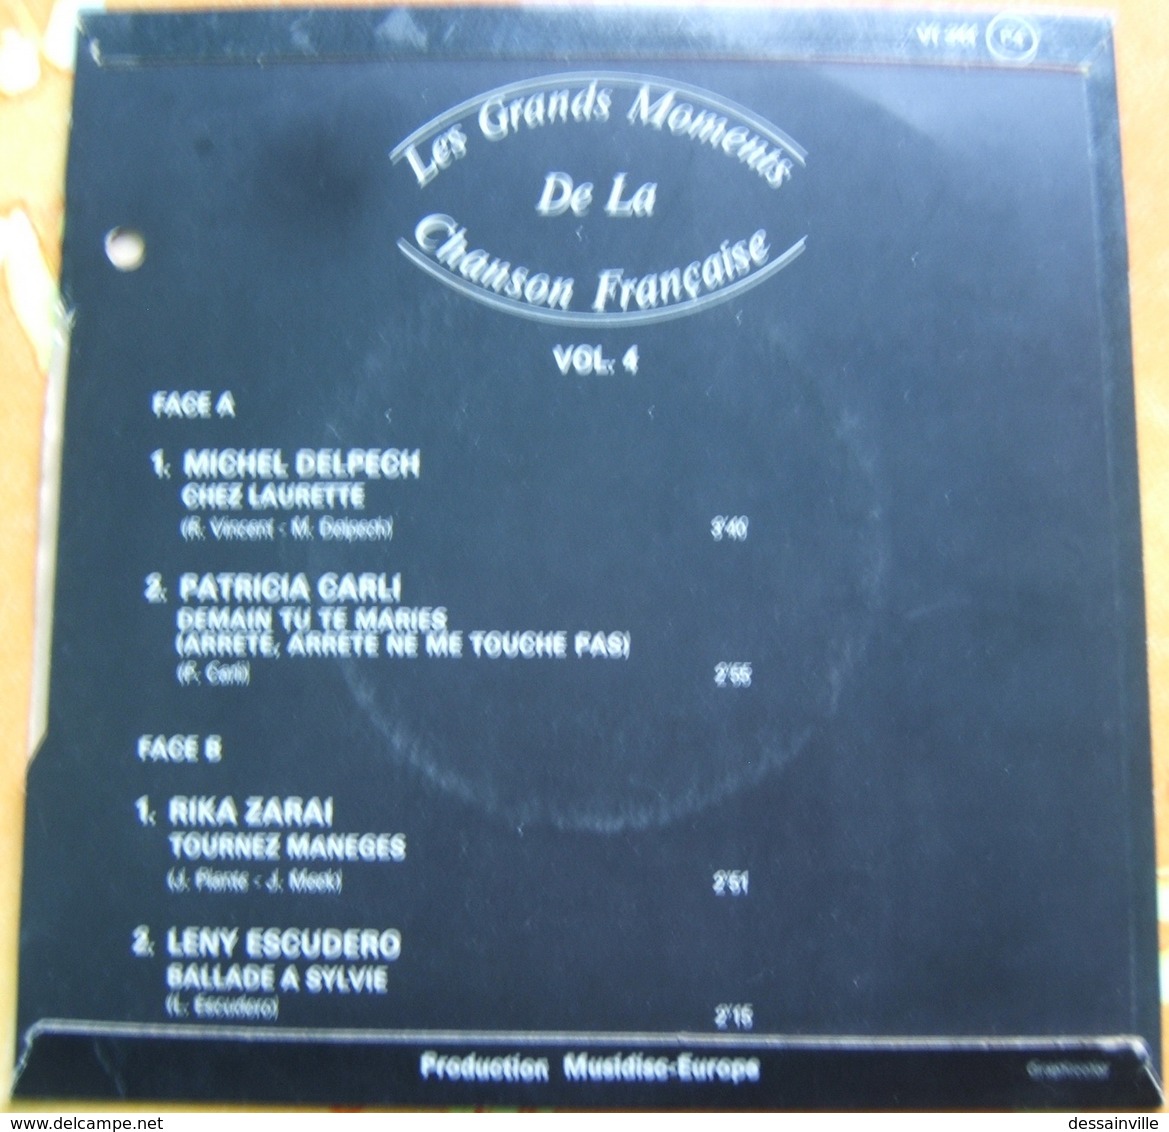 45 Tours VOLUME 4 - GRANDS MOMENTS CHANSON FRANCAISE - DELPECH CARLI ZARAÏ ESCUDERO - Compilations